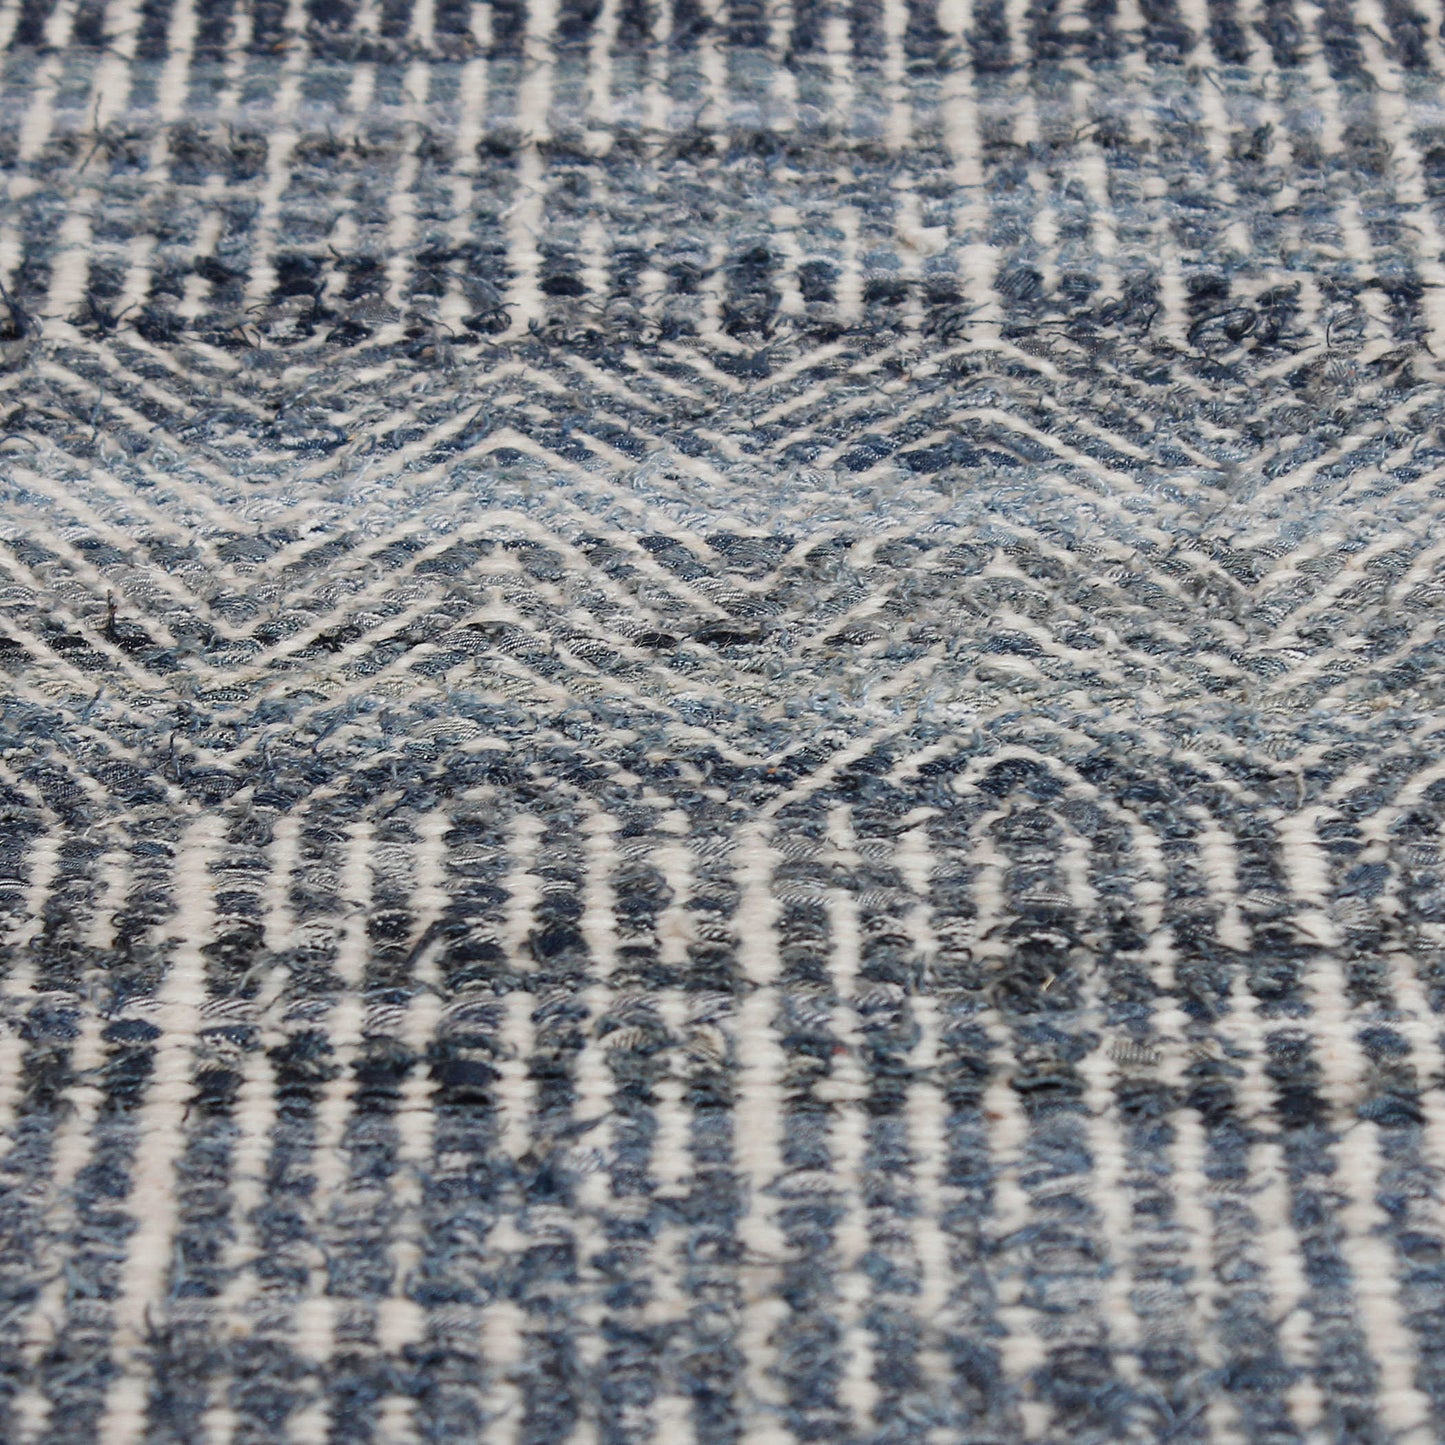 Macro shot of a geometric wool rug with denim fibers and light green and gray fibers. 